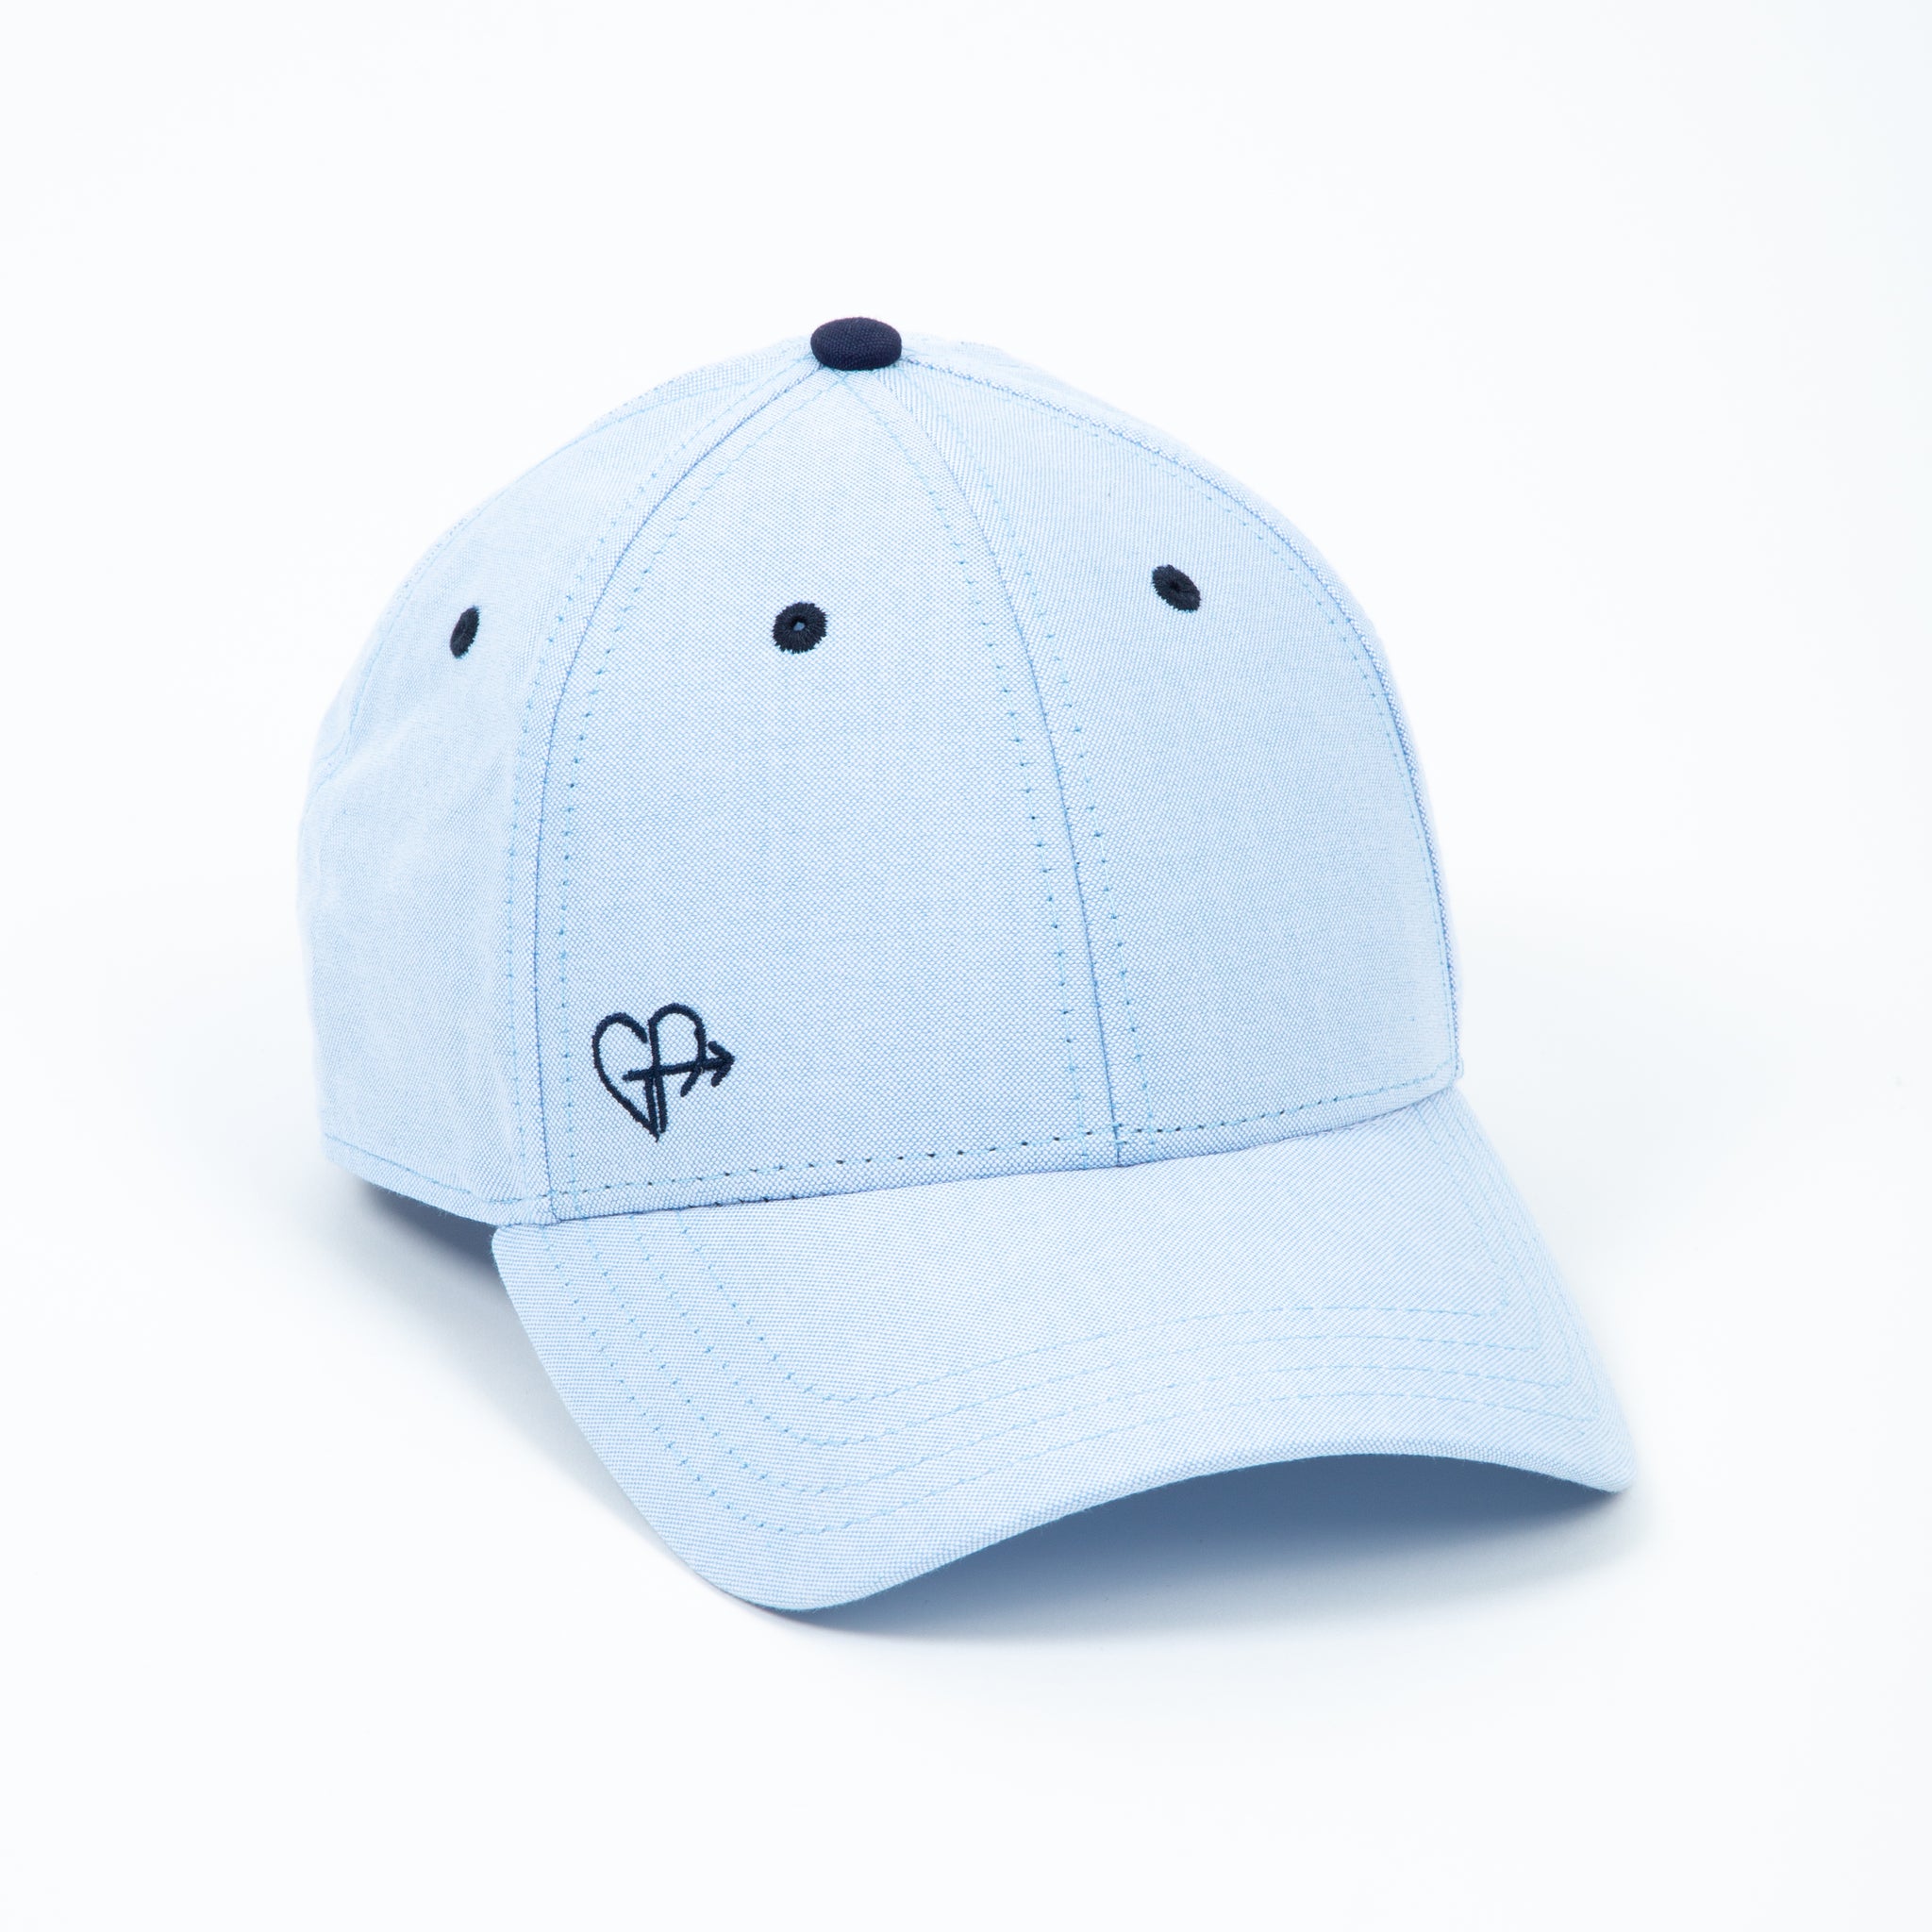 GA heart logo blue hat front Galey Alix